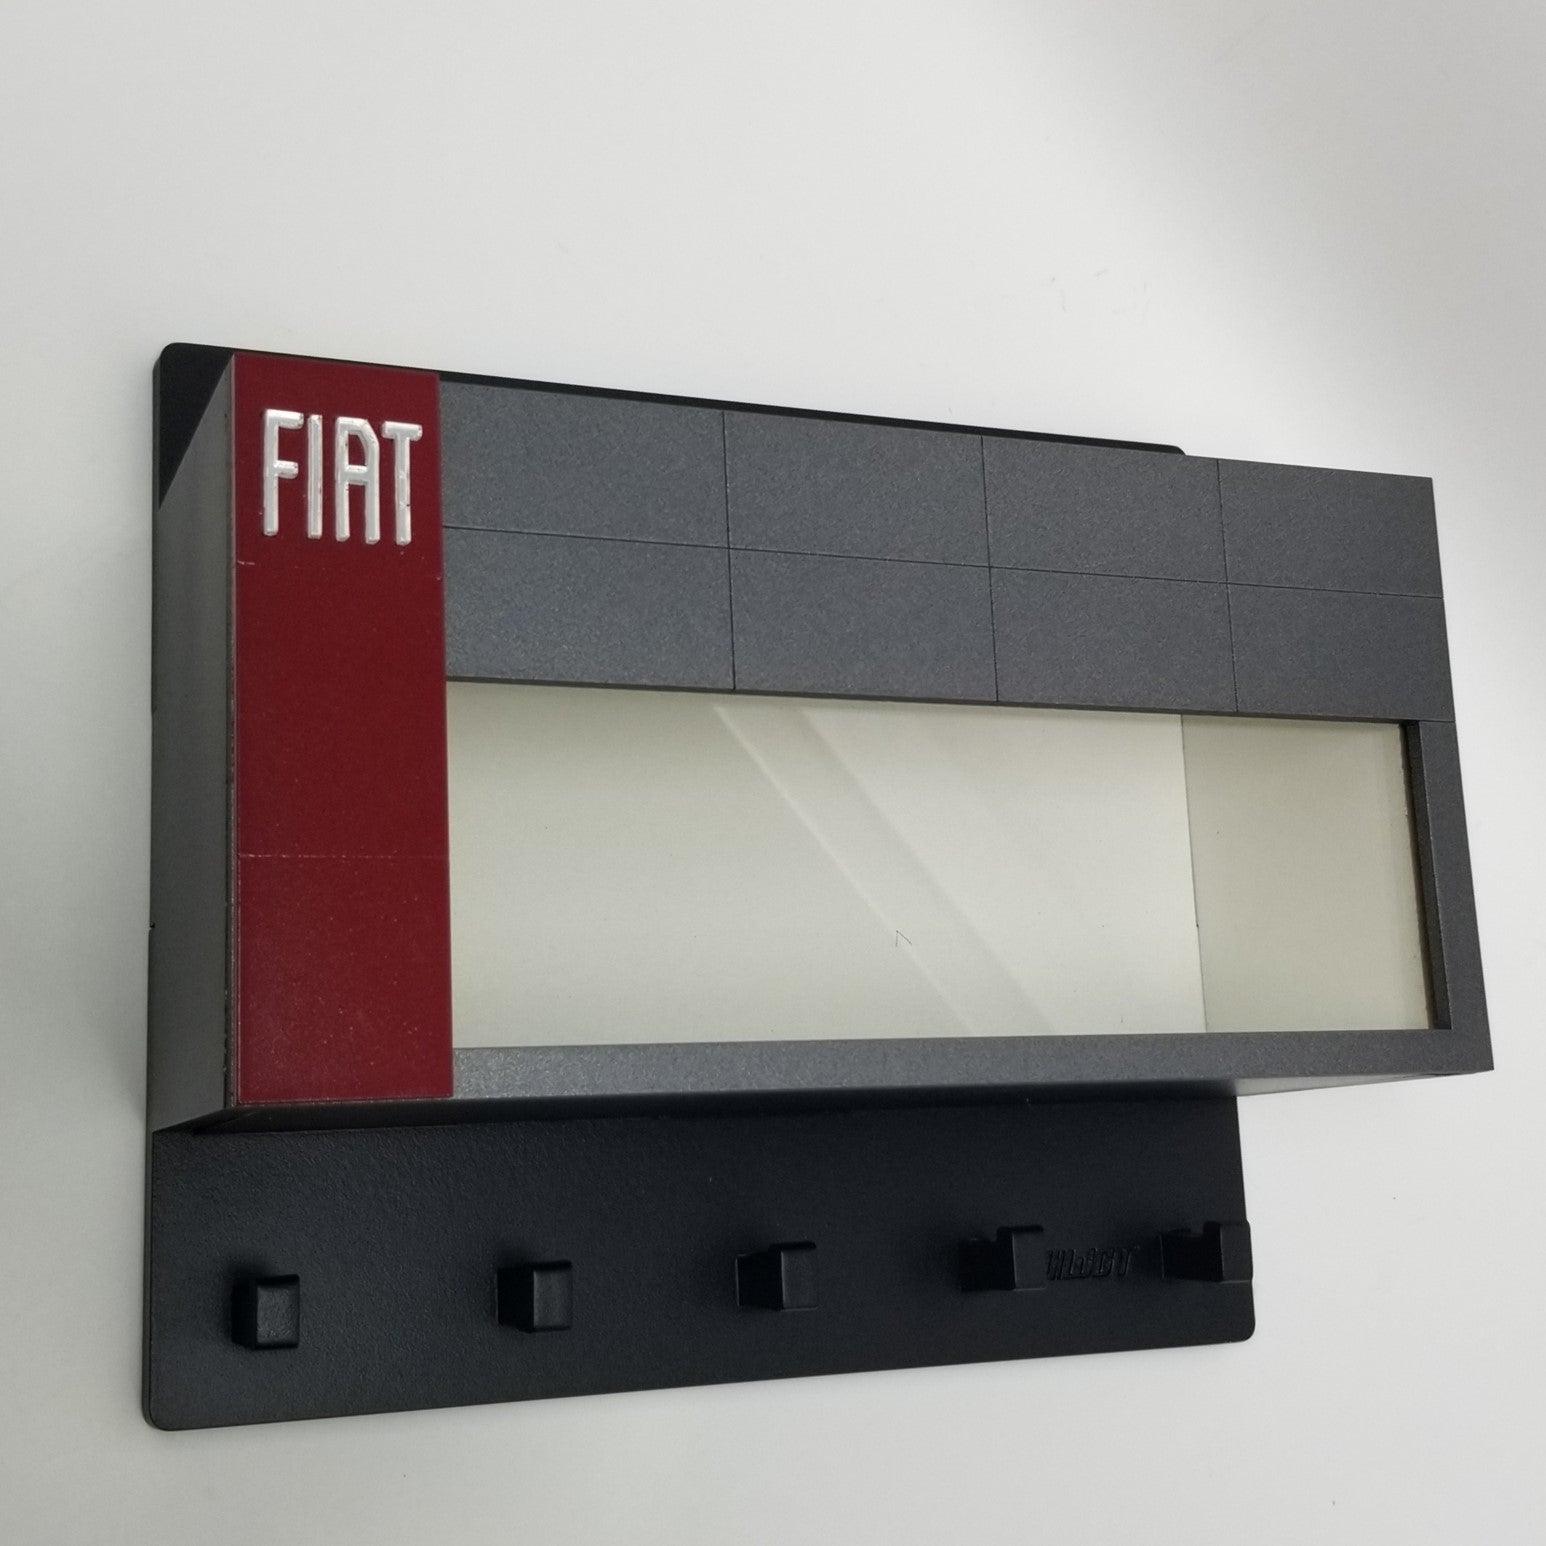 Fiat Dealership Wall Key Hook Rack - Exclusive Item - Handcrafted Key Holder - Brazilian Shop